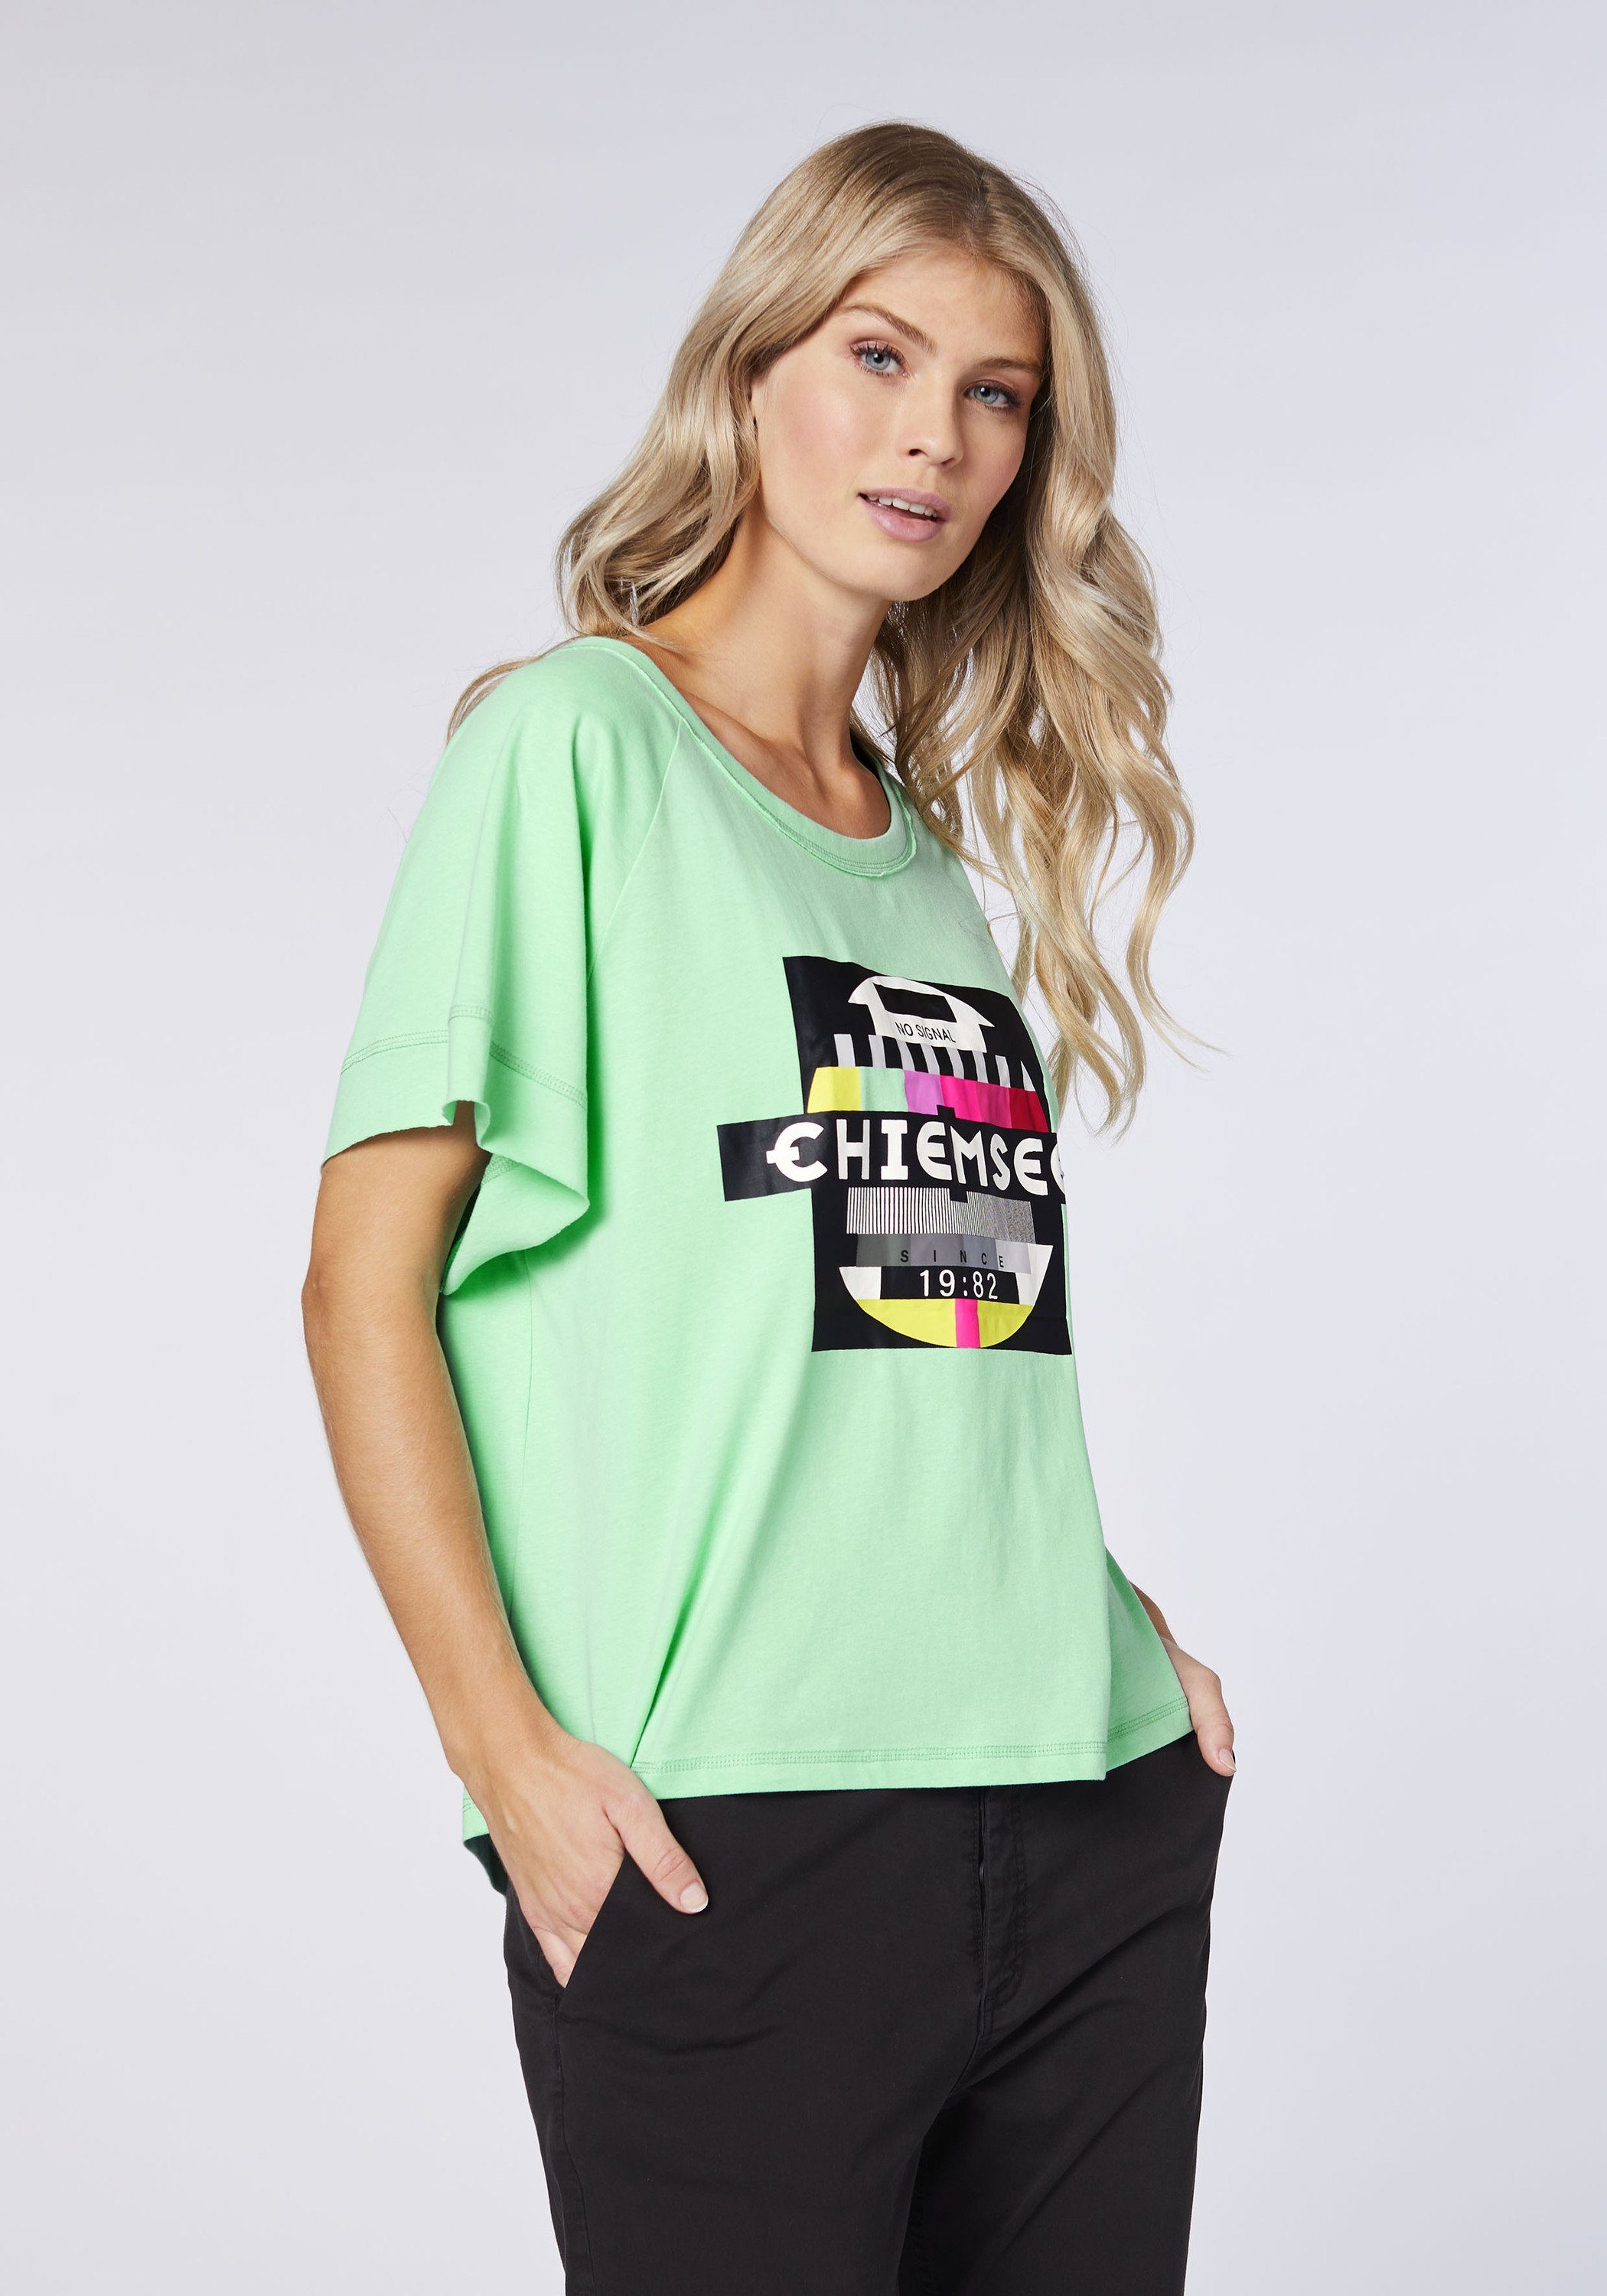 Chiemsee Print-Shirt Kastiges T-Shirt 1 Neptune NO-SIGNAL-Print mit Green